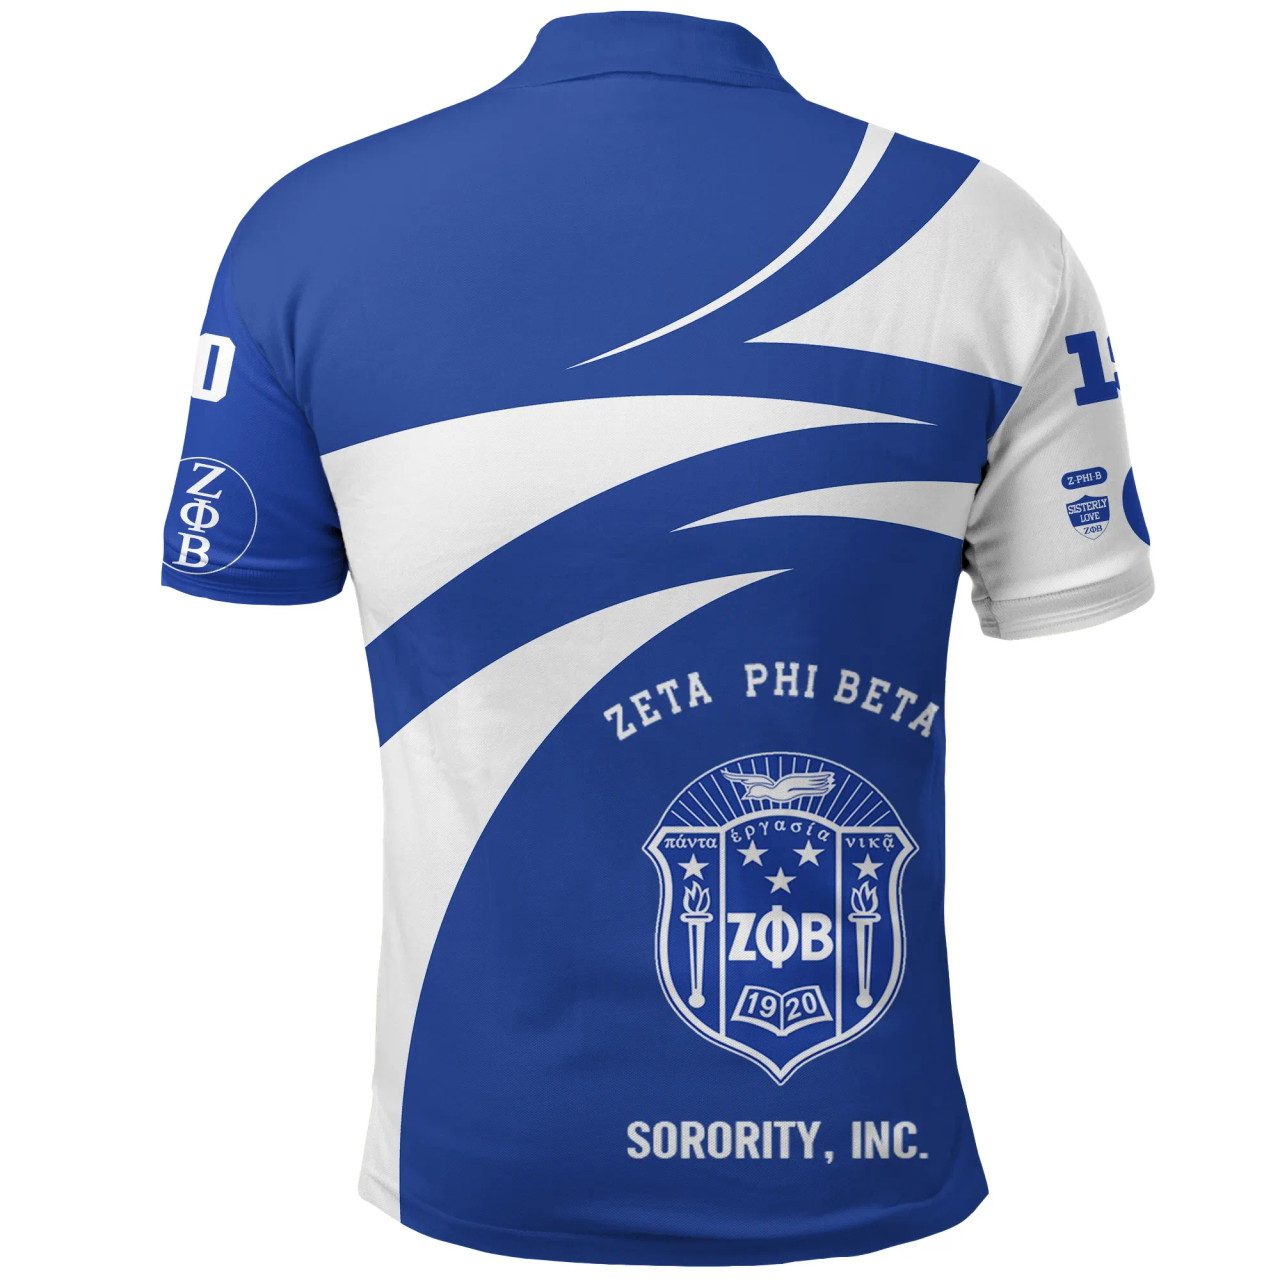 Zeta Phi Beta Polo Shirt – Sorority Special Polo Shirt